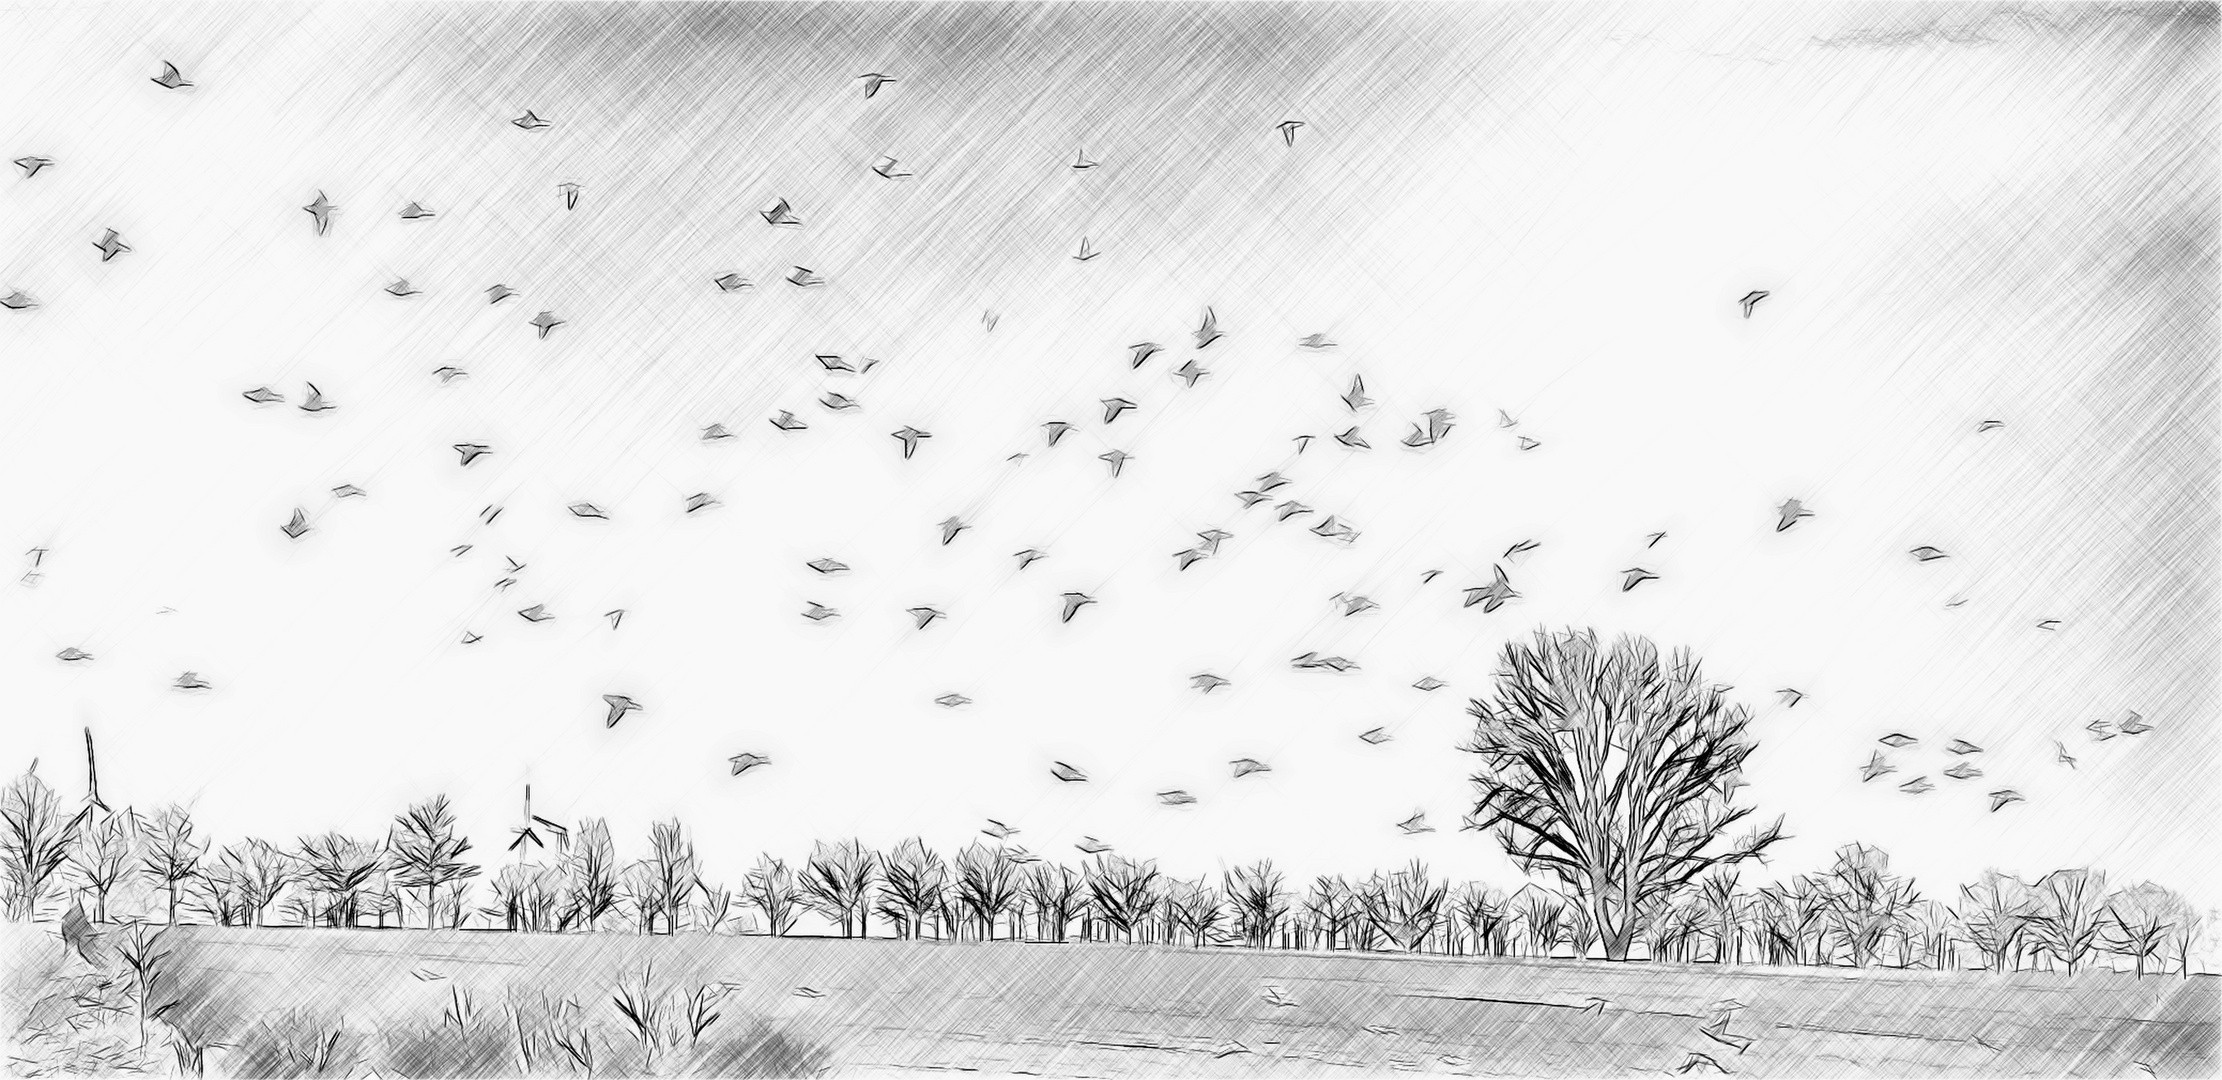 ... bäume und vögel 